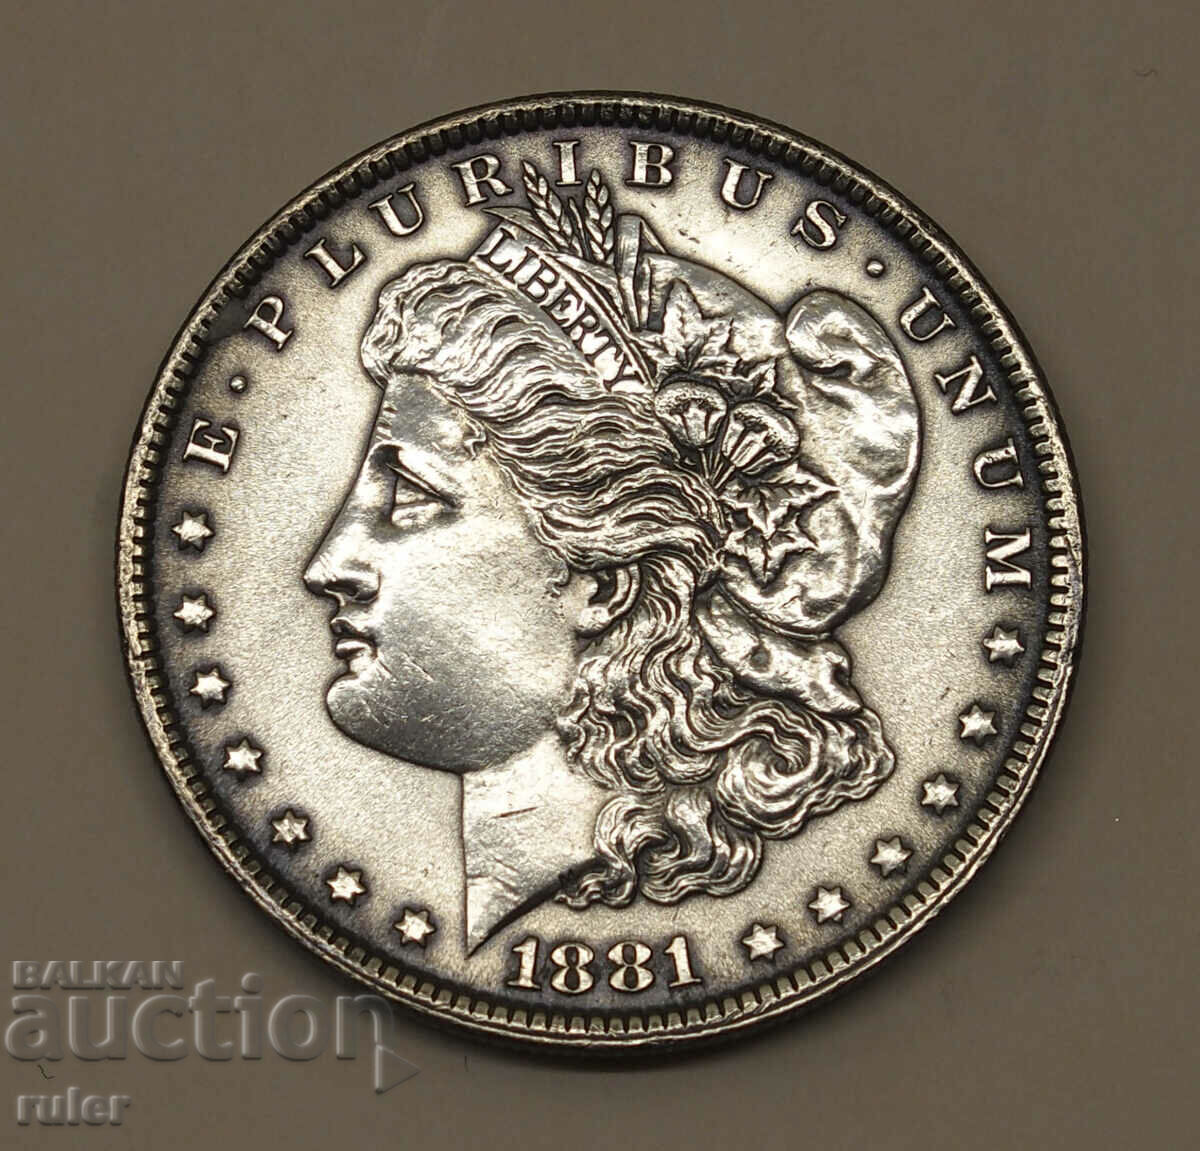 STATELE UNITE ALE AMERICII. 1881 Morgan Dollar - Argint 26,76 g.